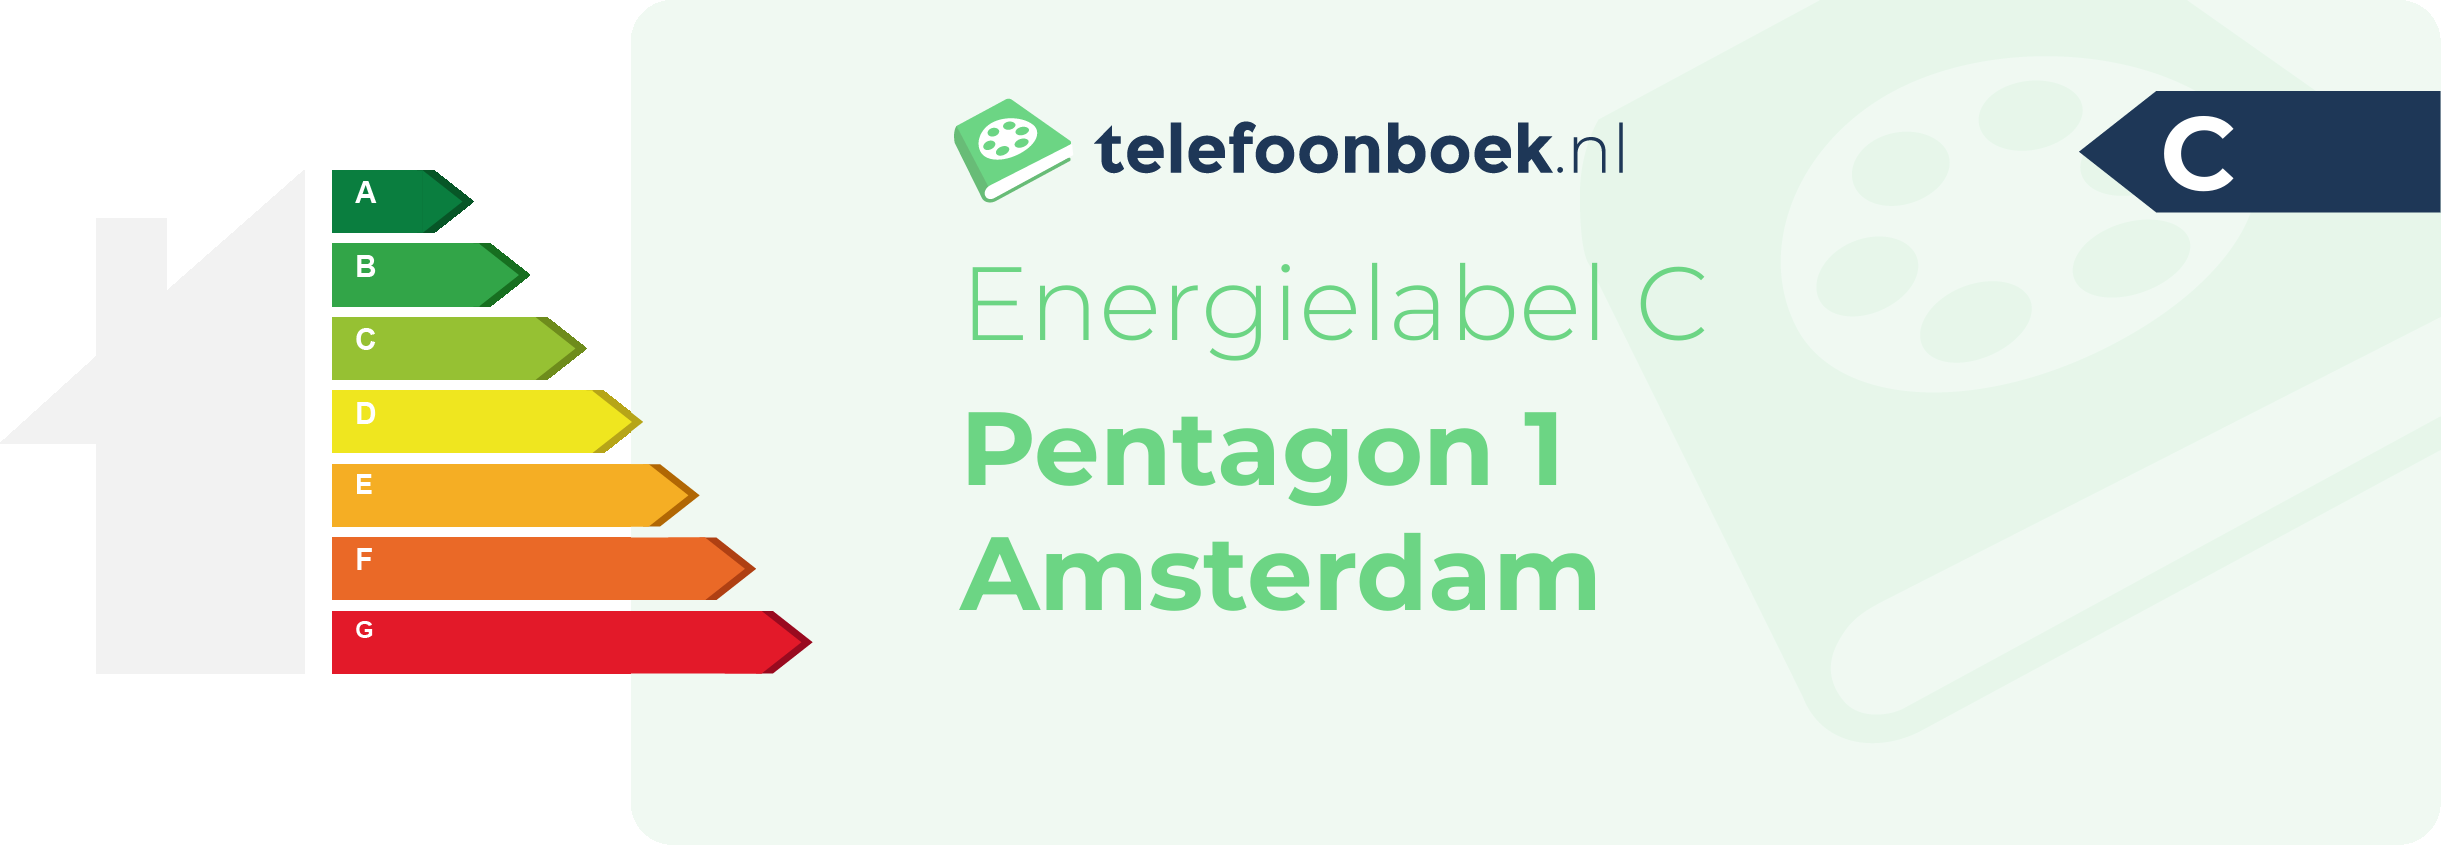 Energielabel Pentagon 1 Amsterdam